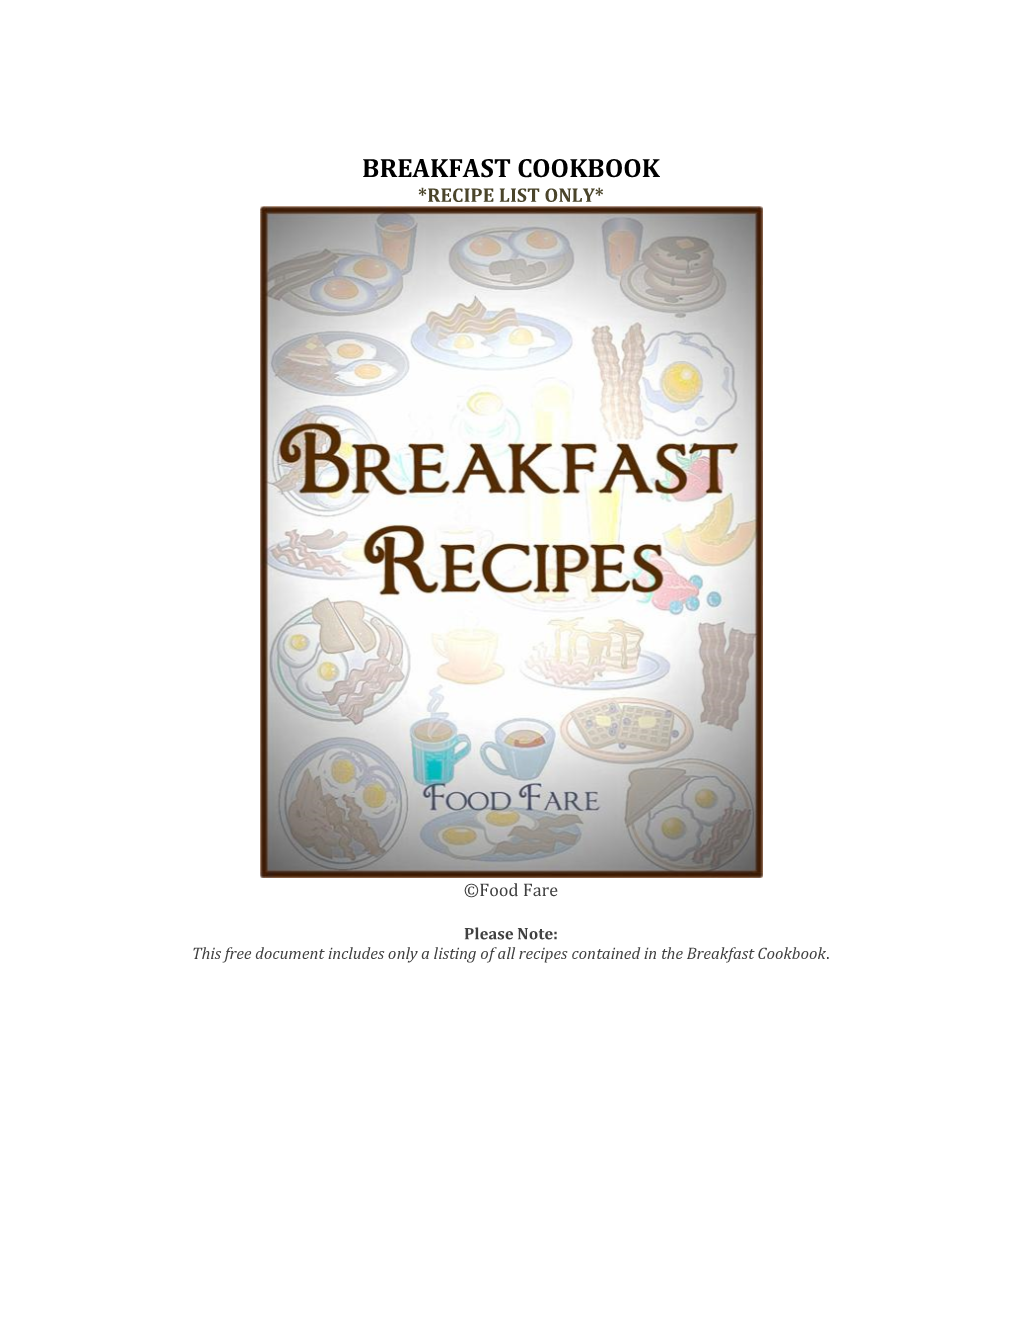 Breakfast Cookbook *Recipe List Only*